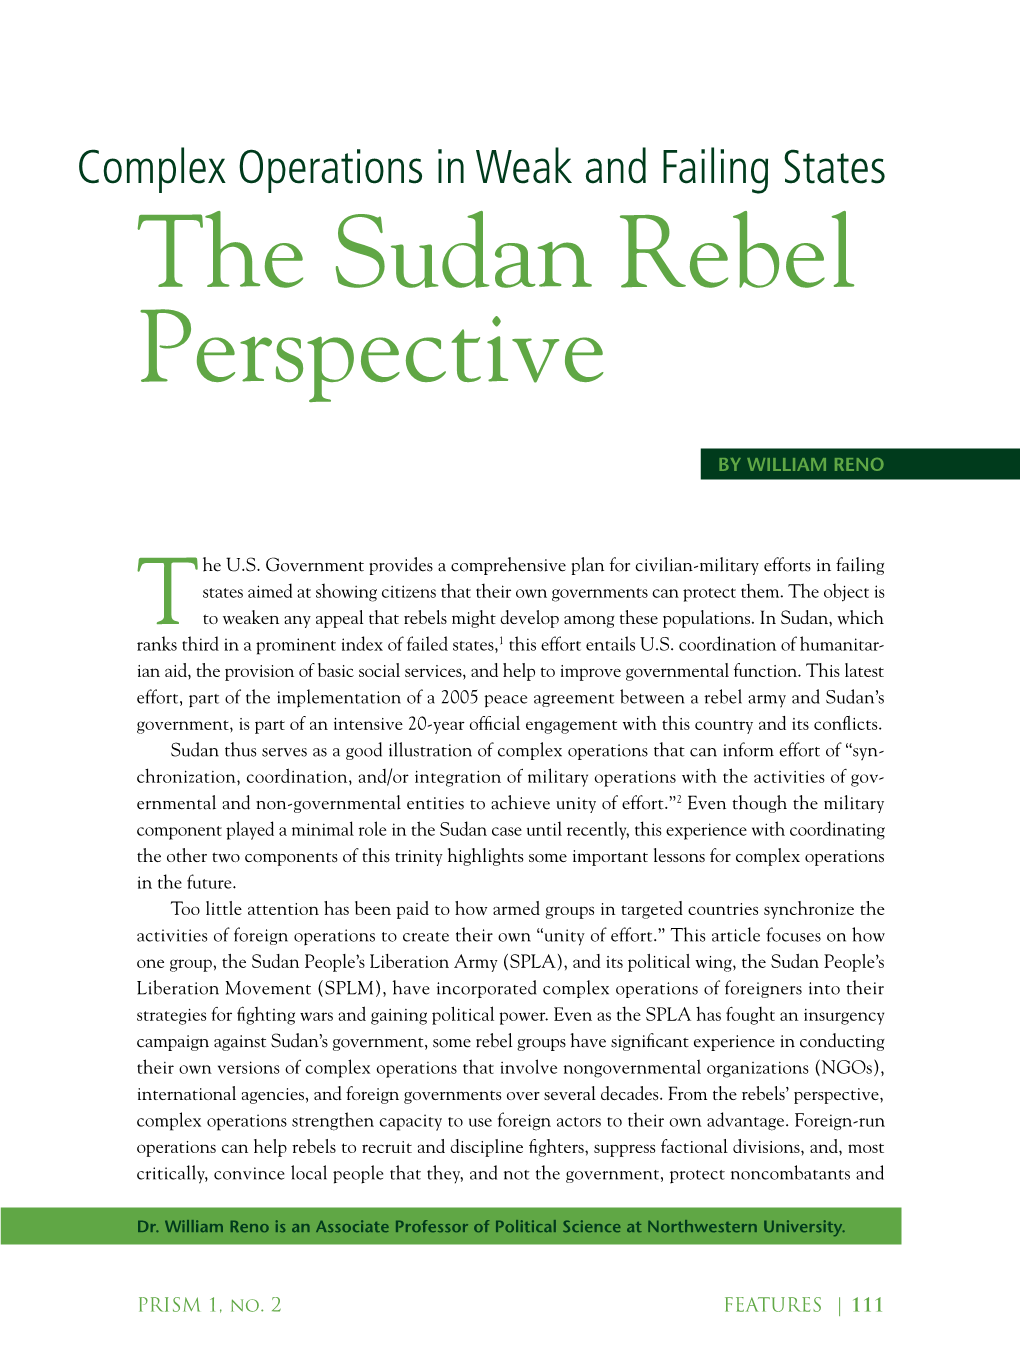 The Sudan Rebel Perspective